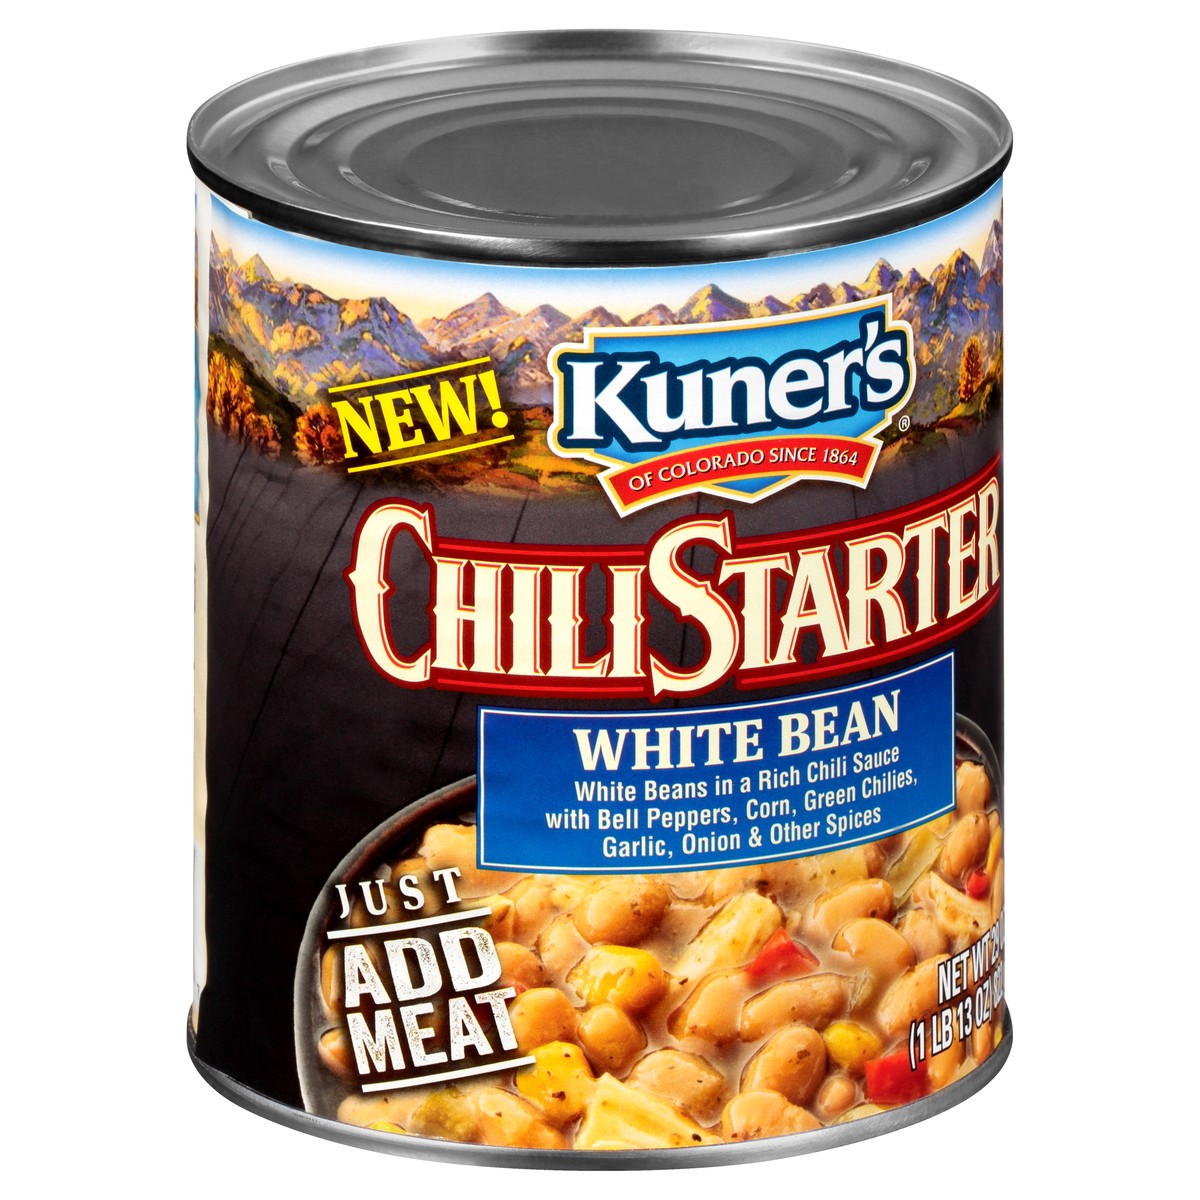 Chili Beans & Starters